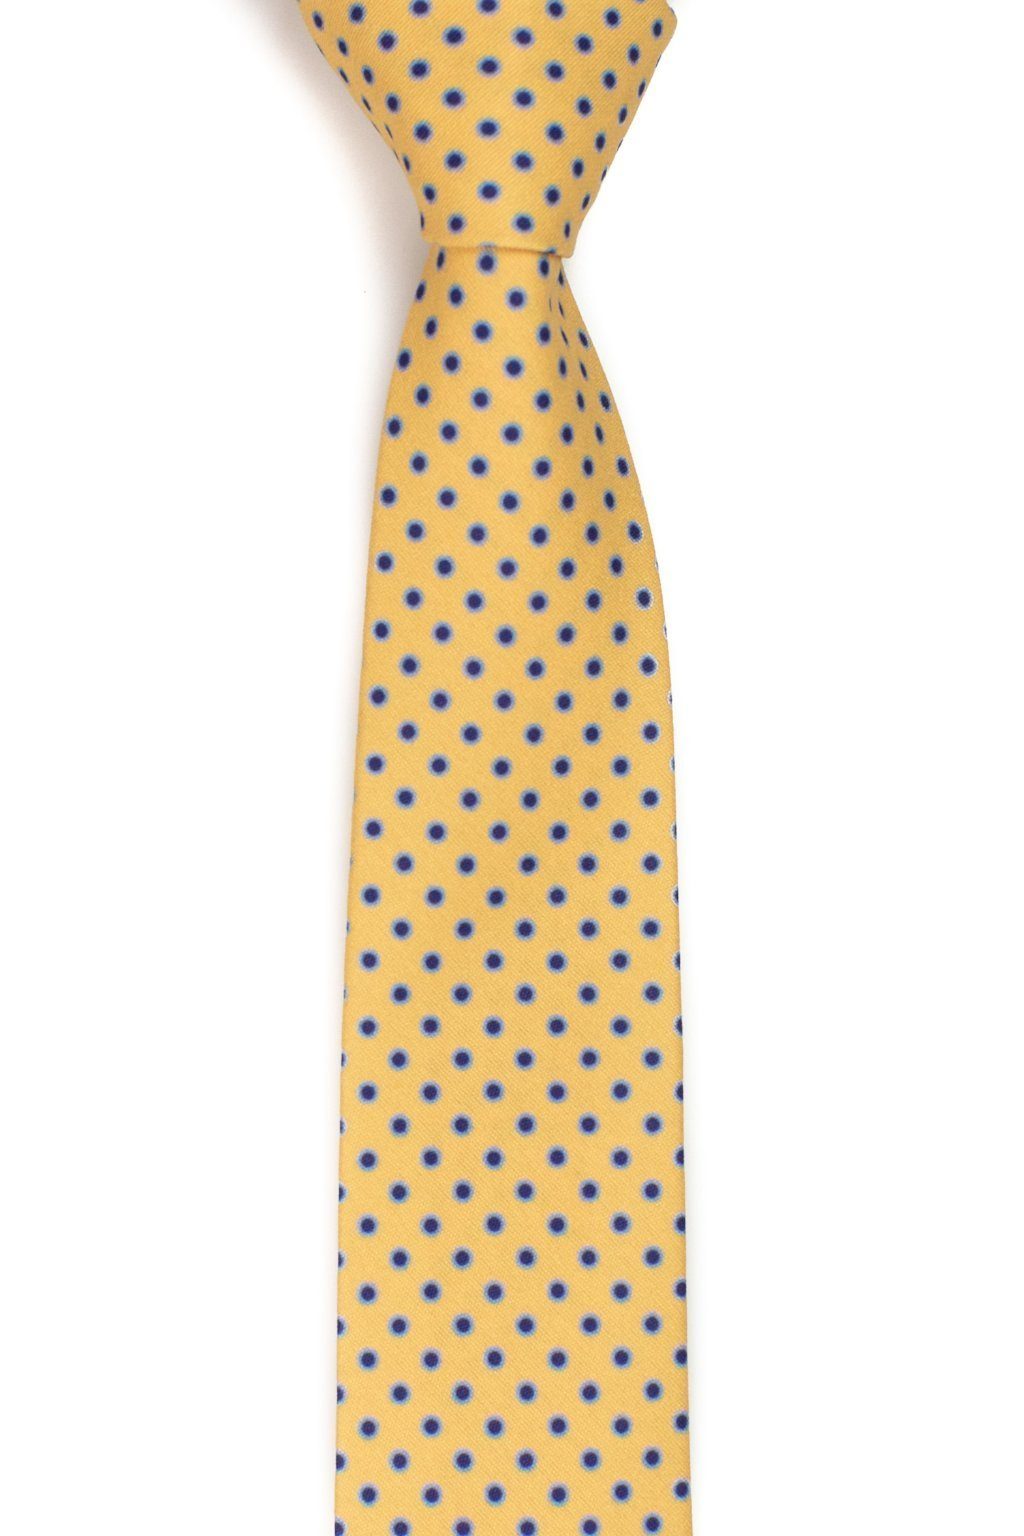 Edison missionary tie